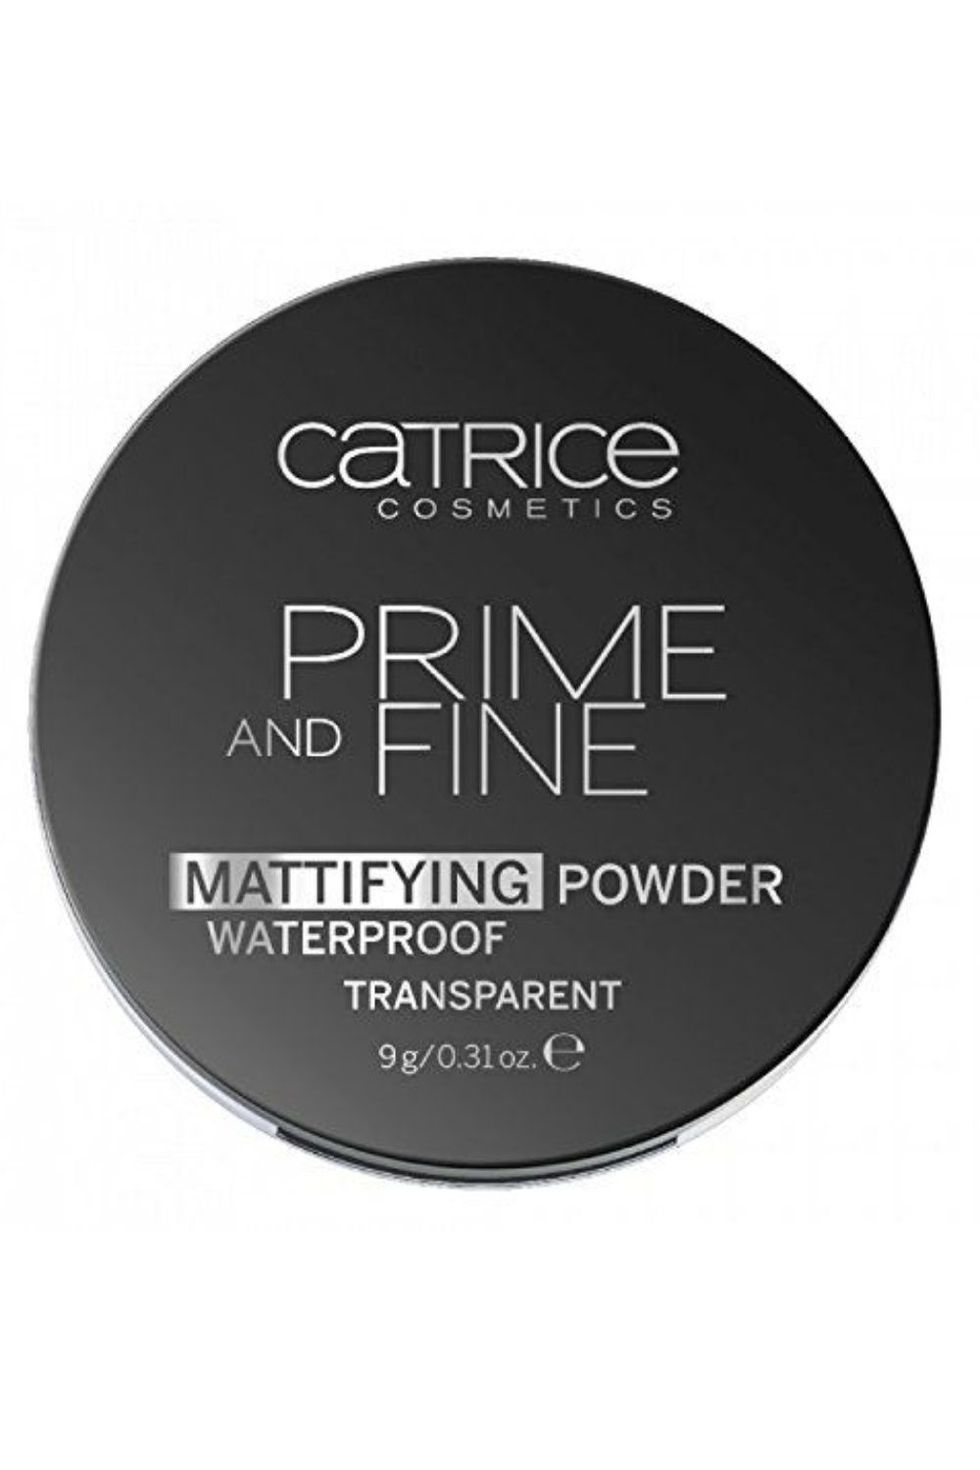 Catrice Prime & Fine Mattifying Powder Waterproof